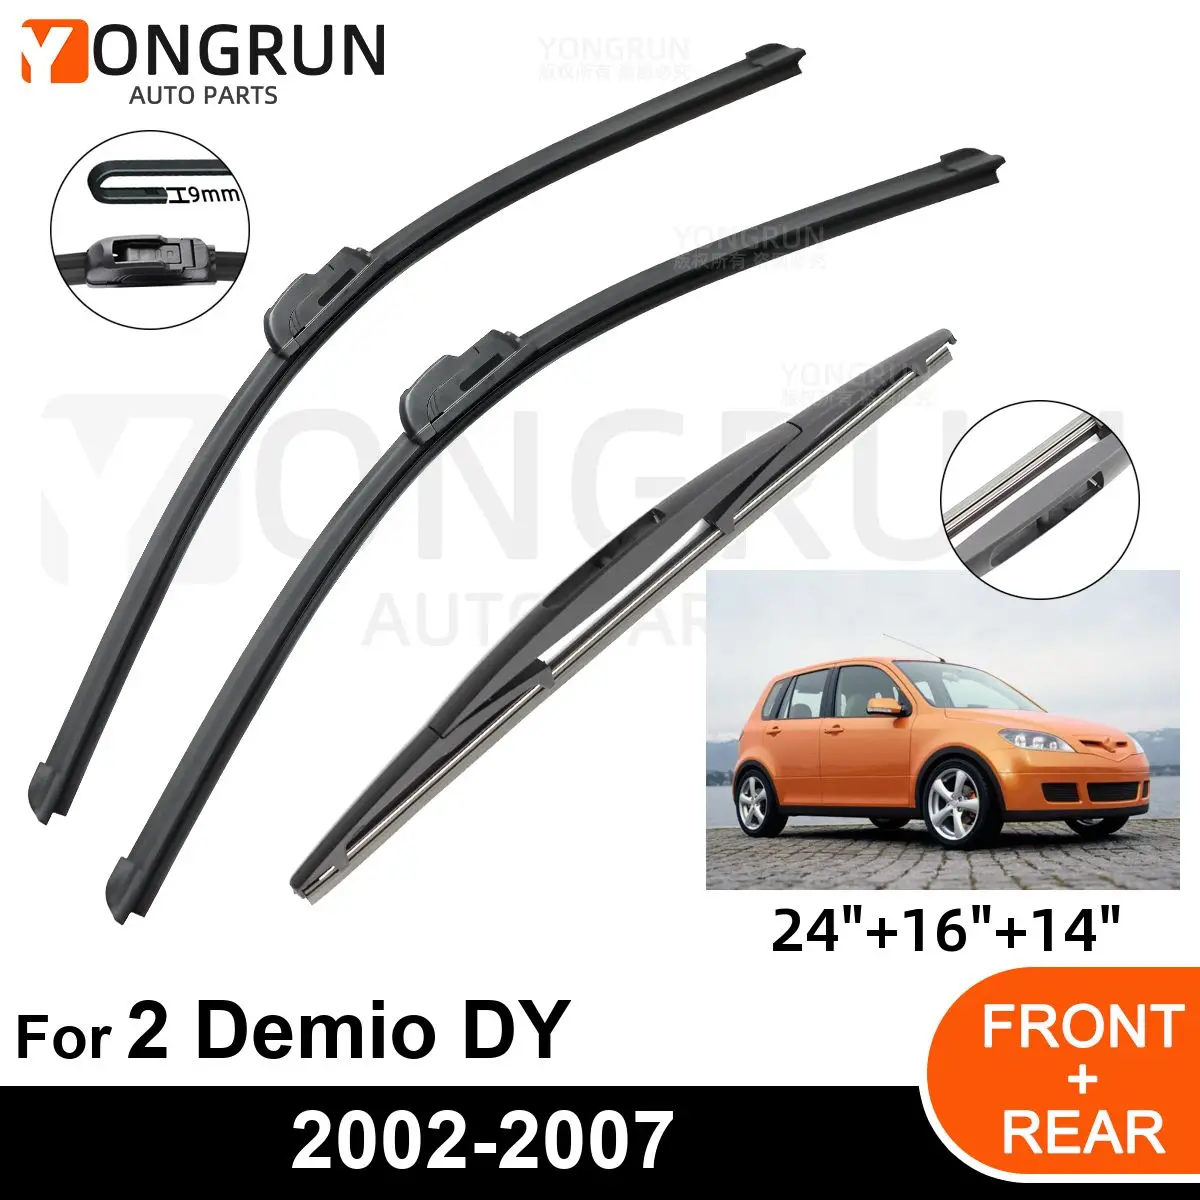 

3PCS Car Wiper for Mazda 2 Demio DY 2002-2007 Front Rear Windshield Windscreen Wiper Blade Rubber Accessories